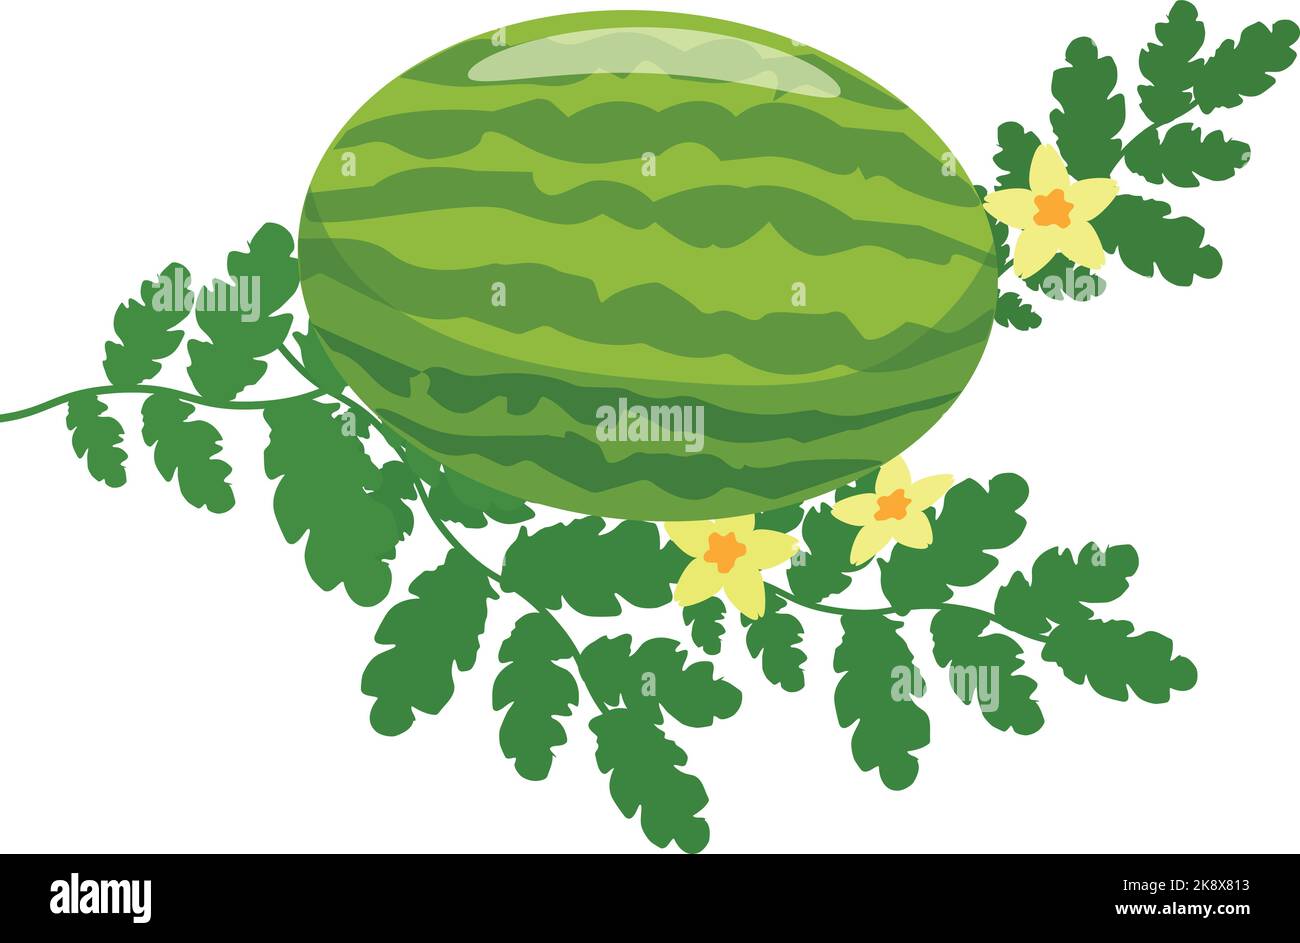 Water melon garden Stock Vector Images - Alamy